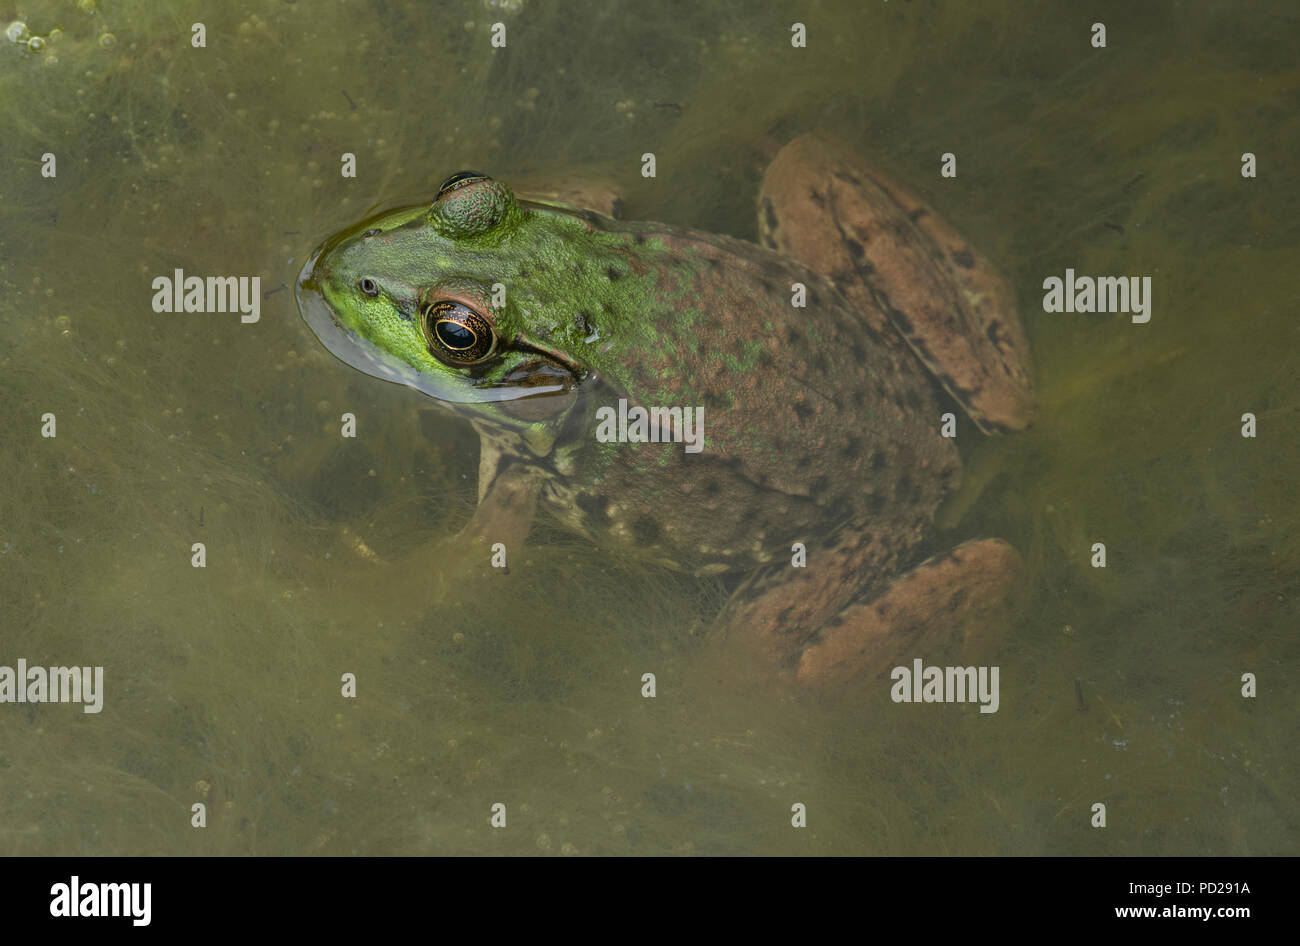 Green frog (Lithobates clamitans), Erwachsener, Nordamerika, durch Überspringen Moody/Dembinsky Foto Assoc Stockfoto